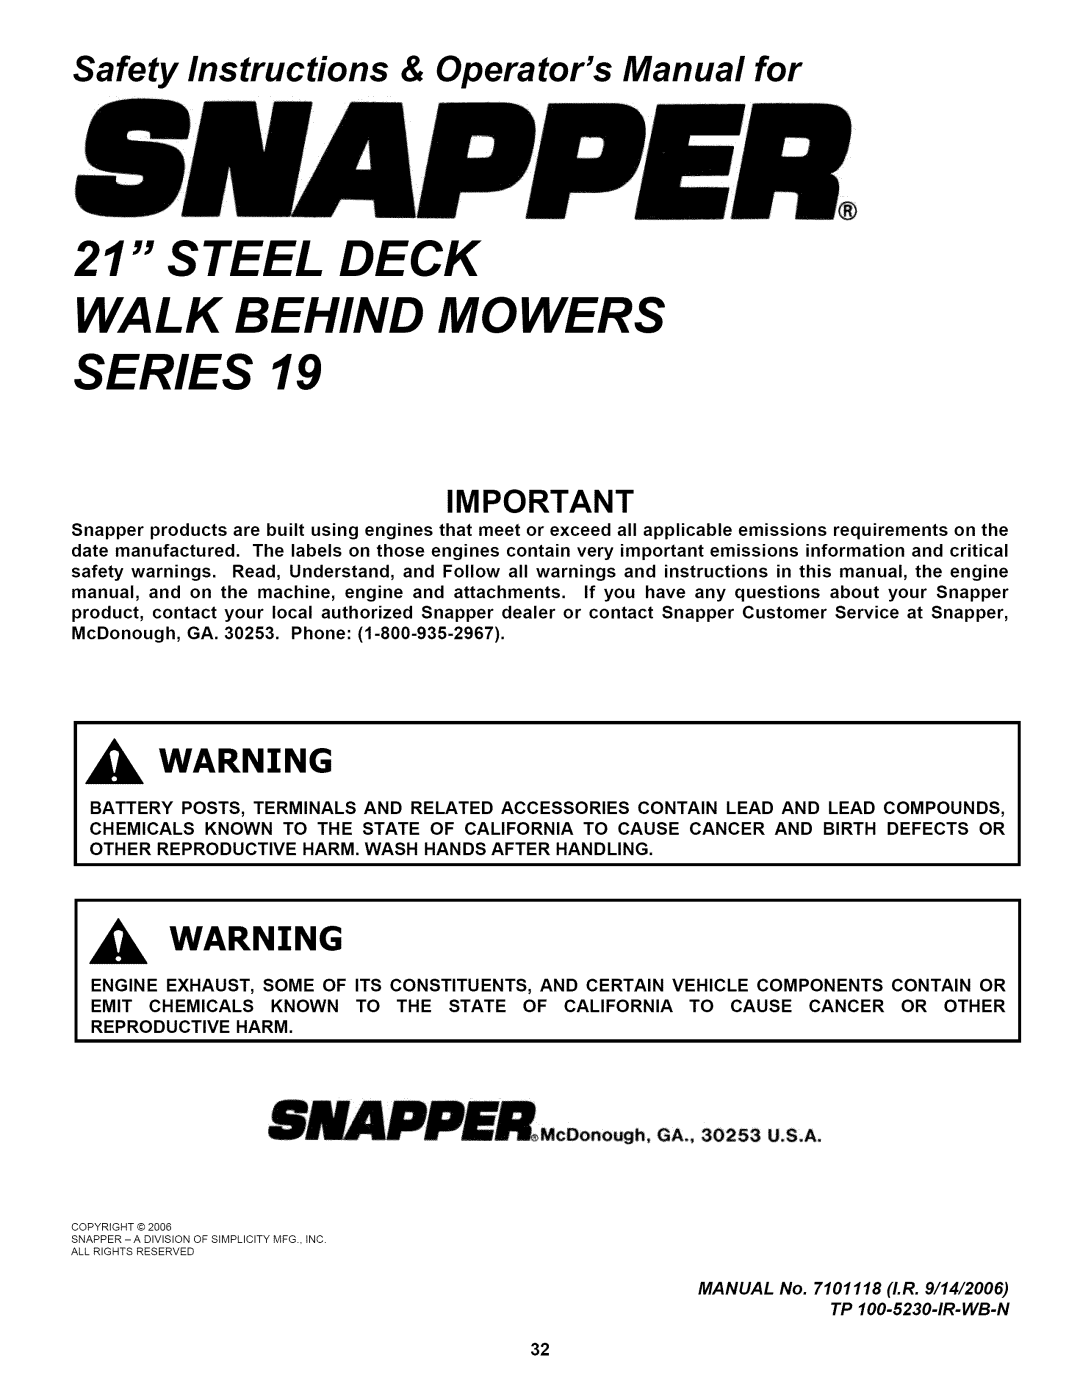 Snapper P217019BVE, P2167519B, P216019KWV Steel Deck Walk Behind Mowers Series, Safety Instructions & Operators Manual for 